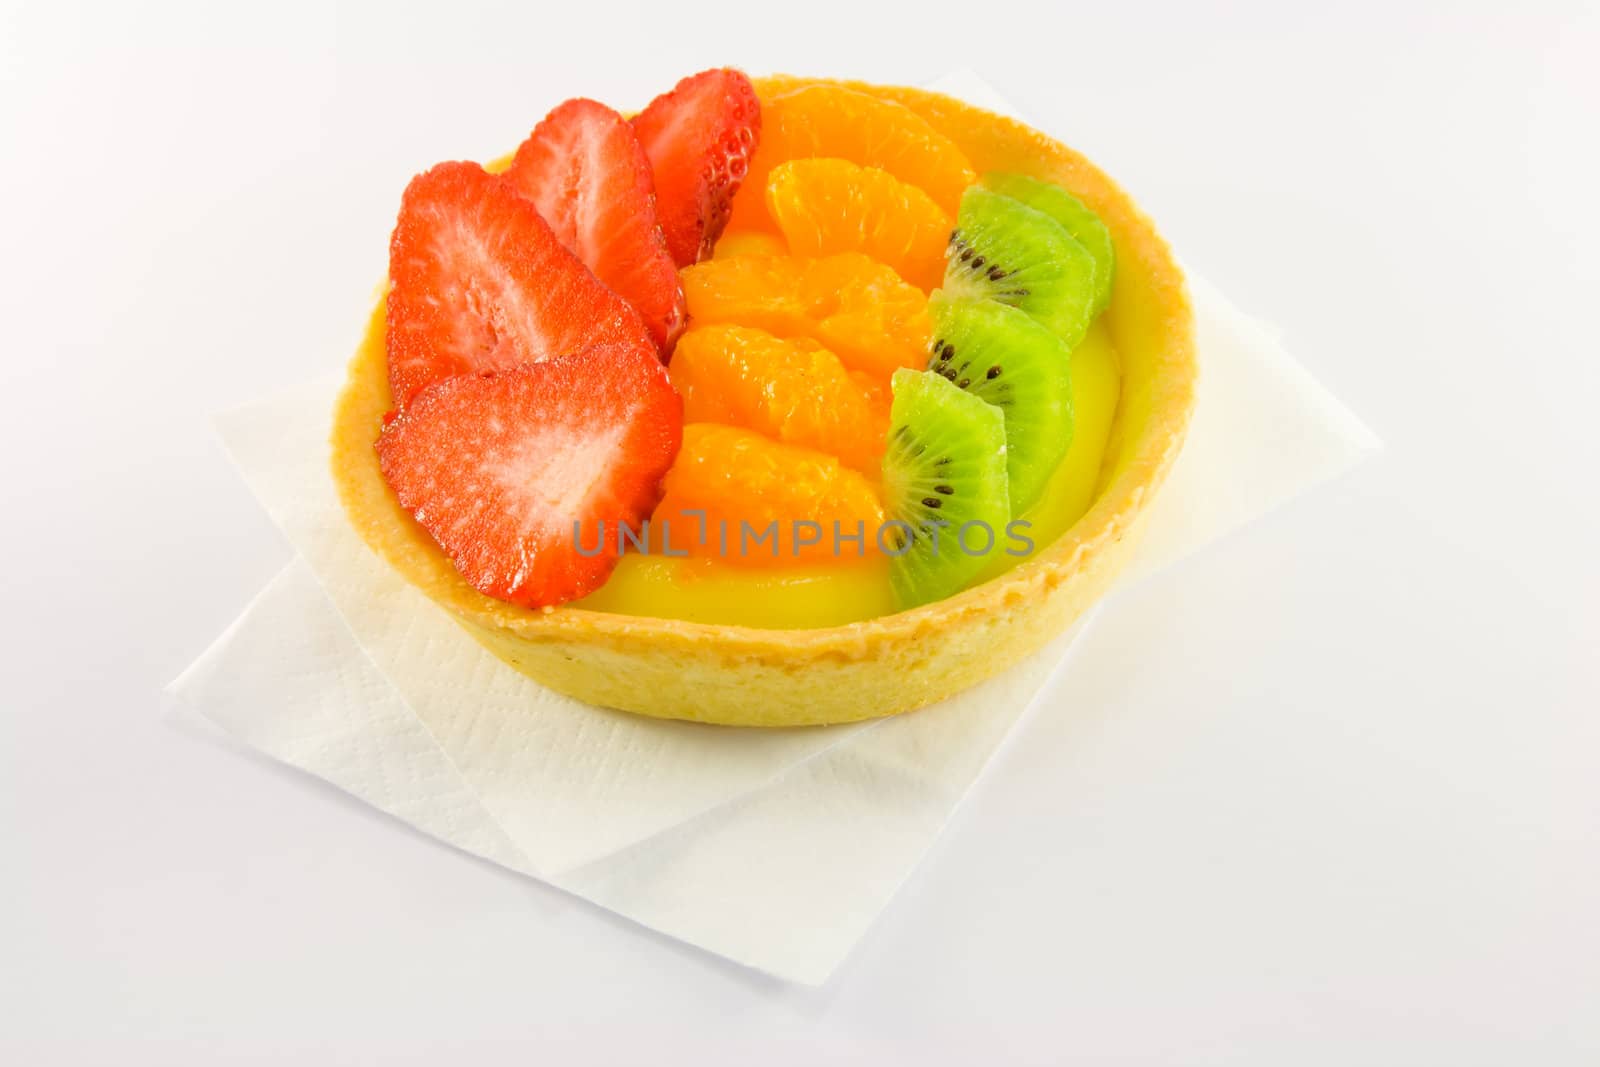 Strawberry, mandarin and kiwi custard fruit tart on a napkin with a white background